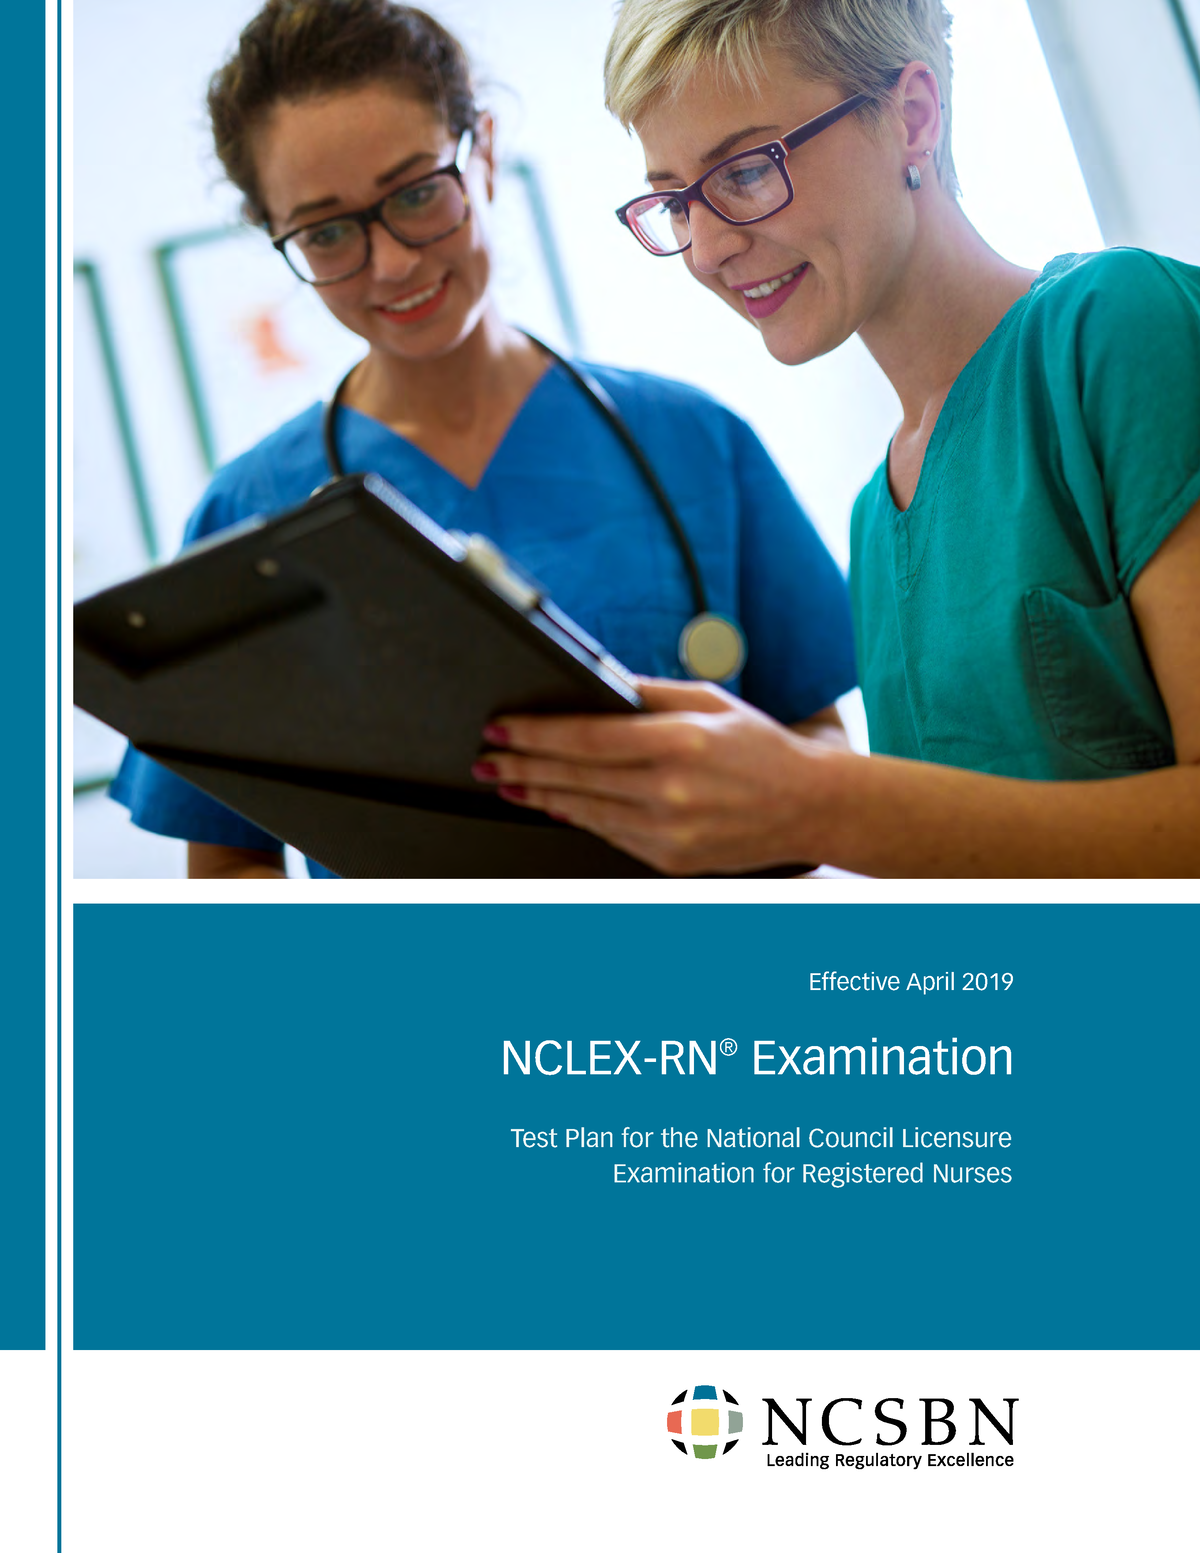 RN Test PlanNclex NCLEXRN ® Examination Test Plan for the National